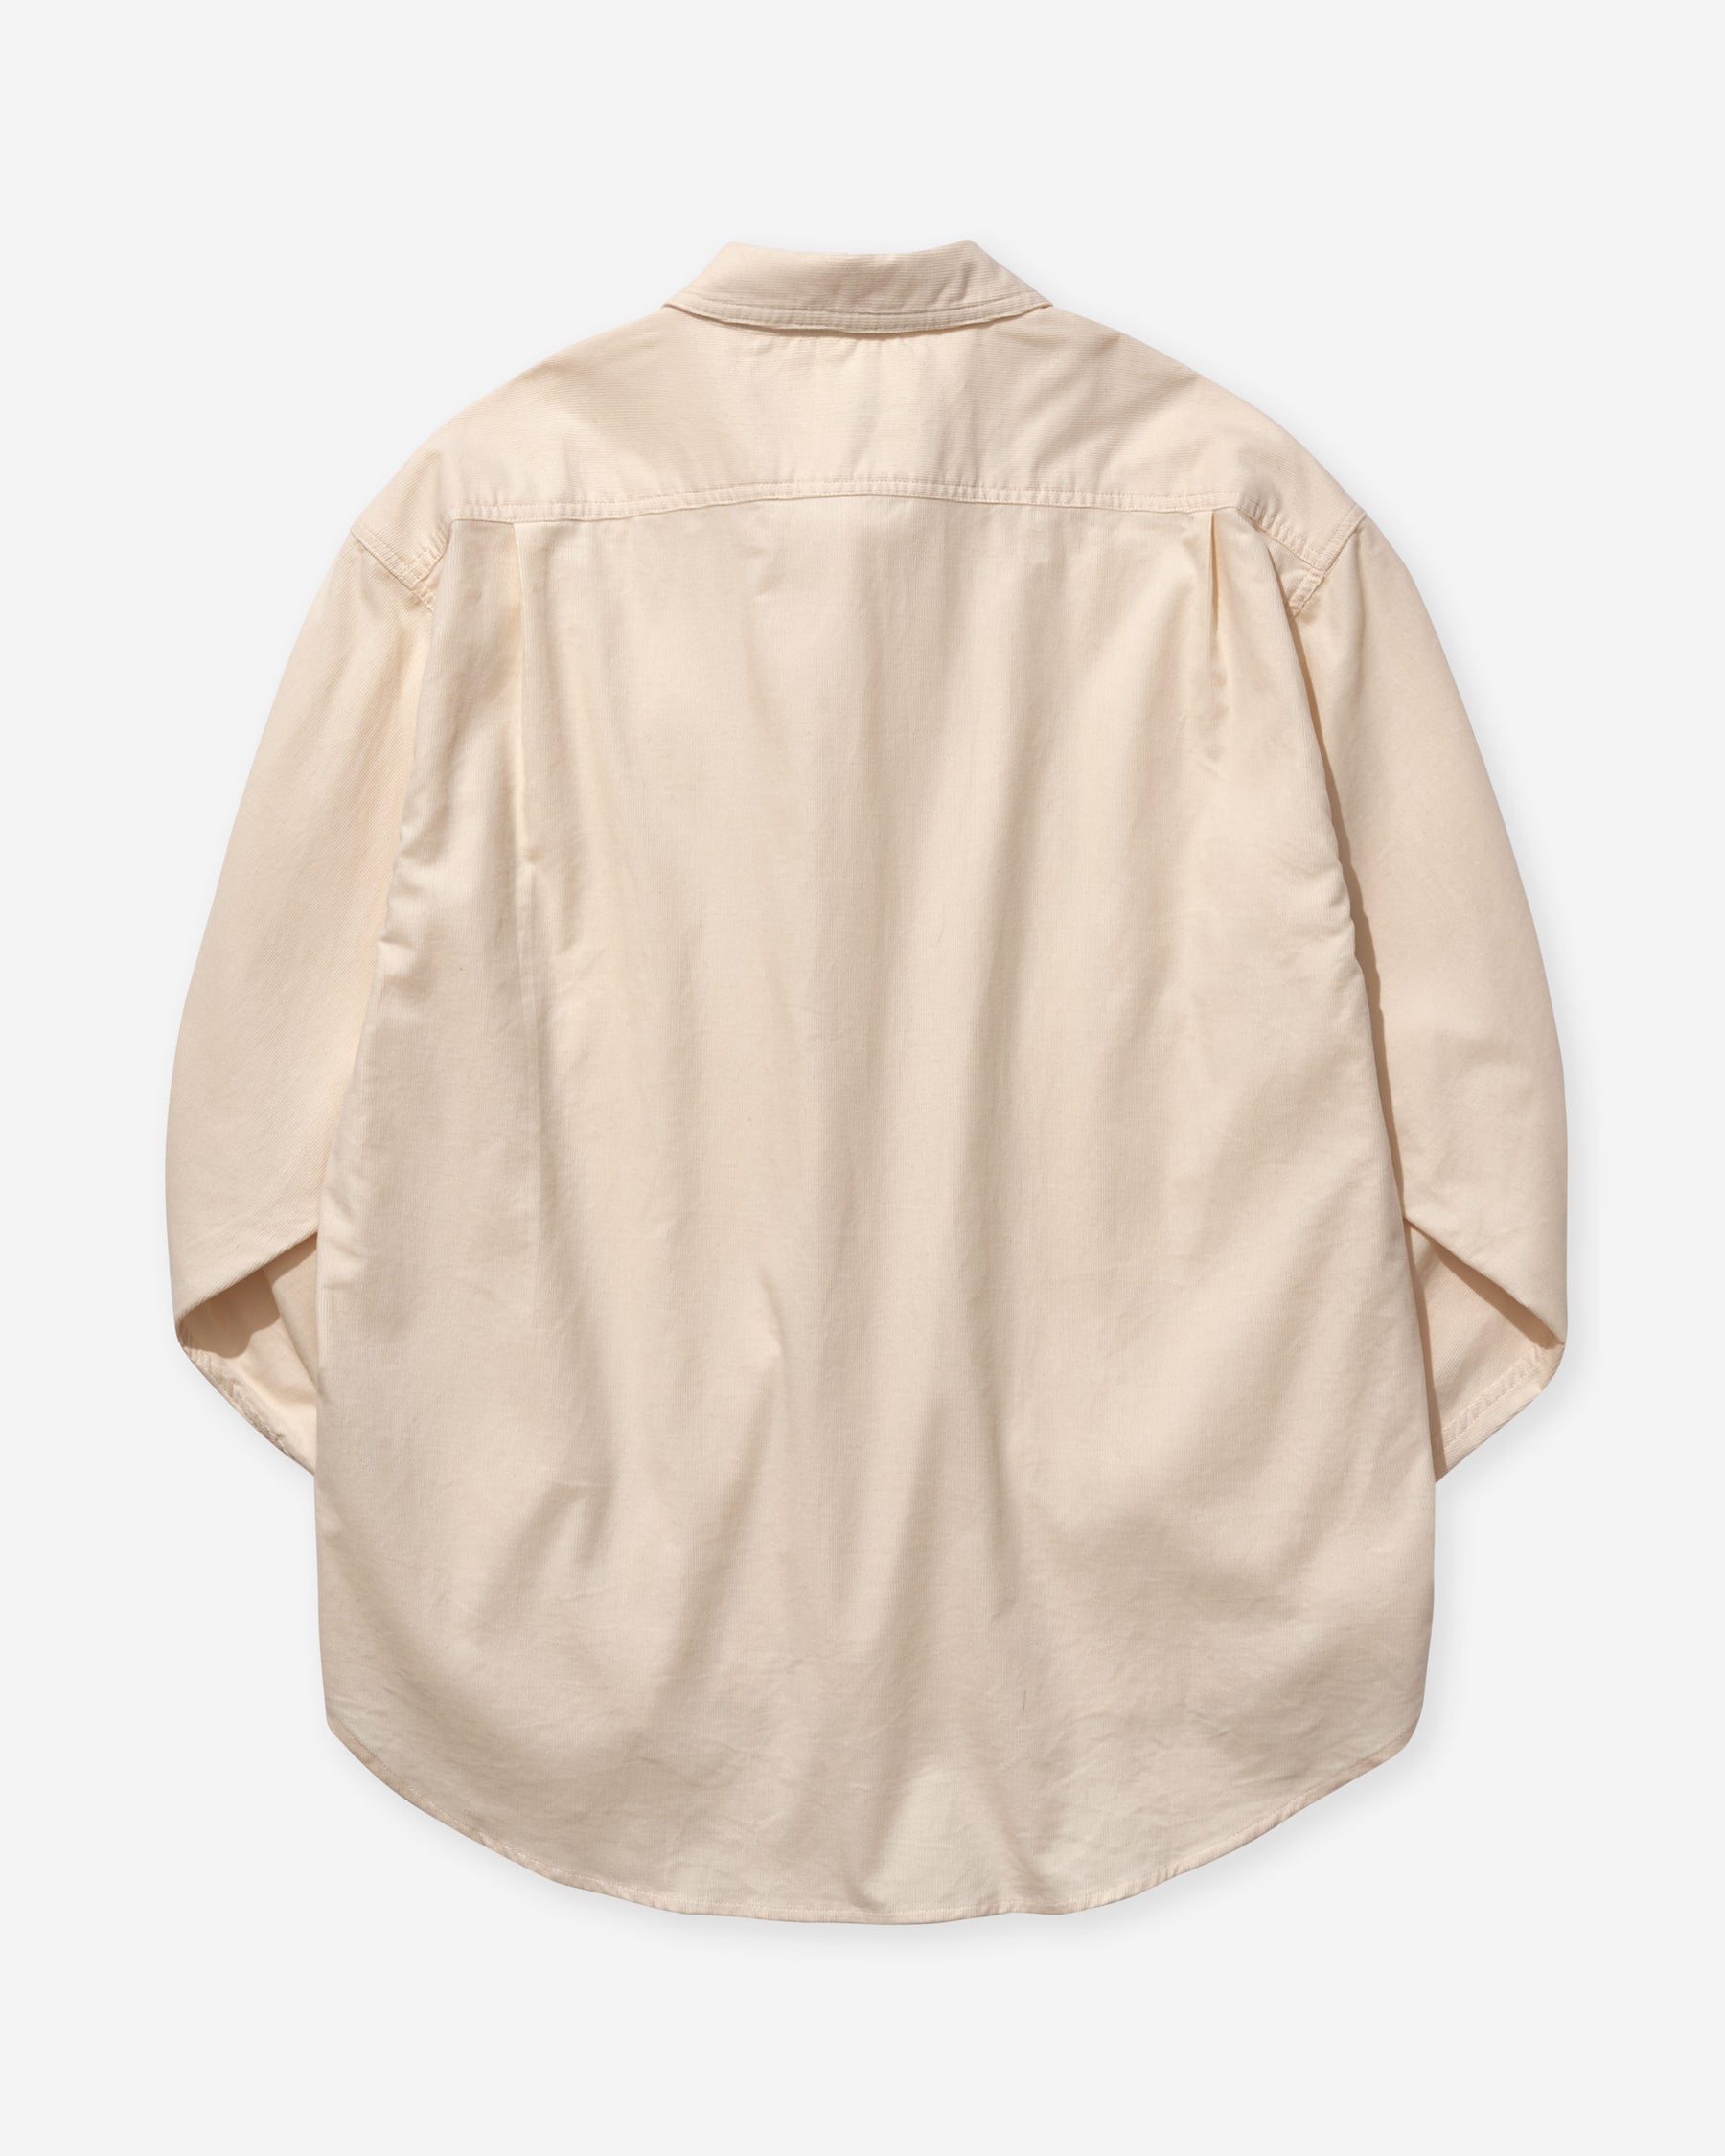 Atom Cord Shirt - Ivory